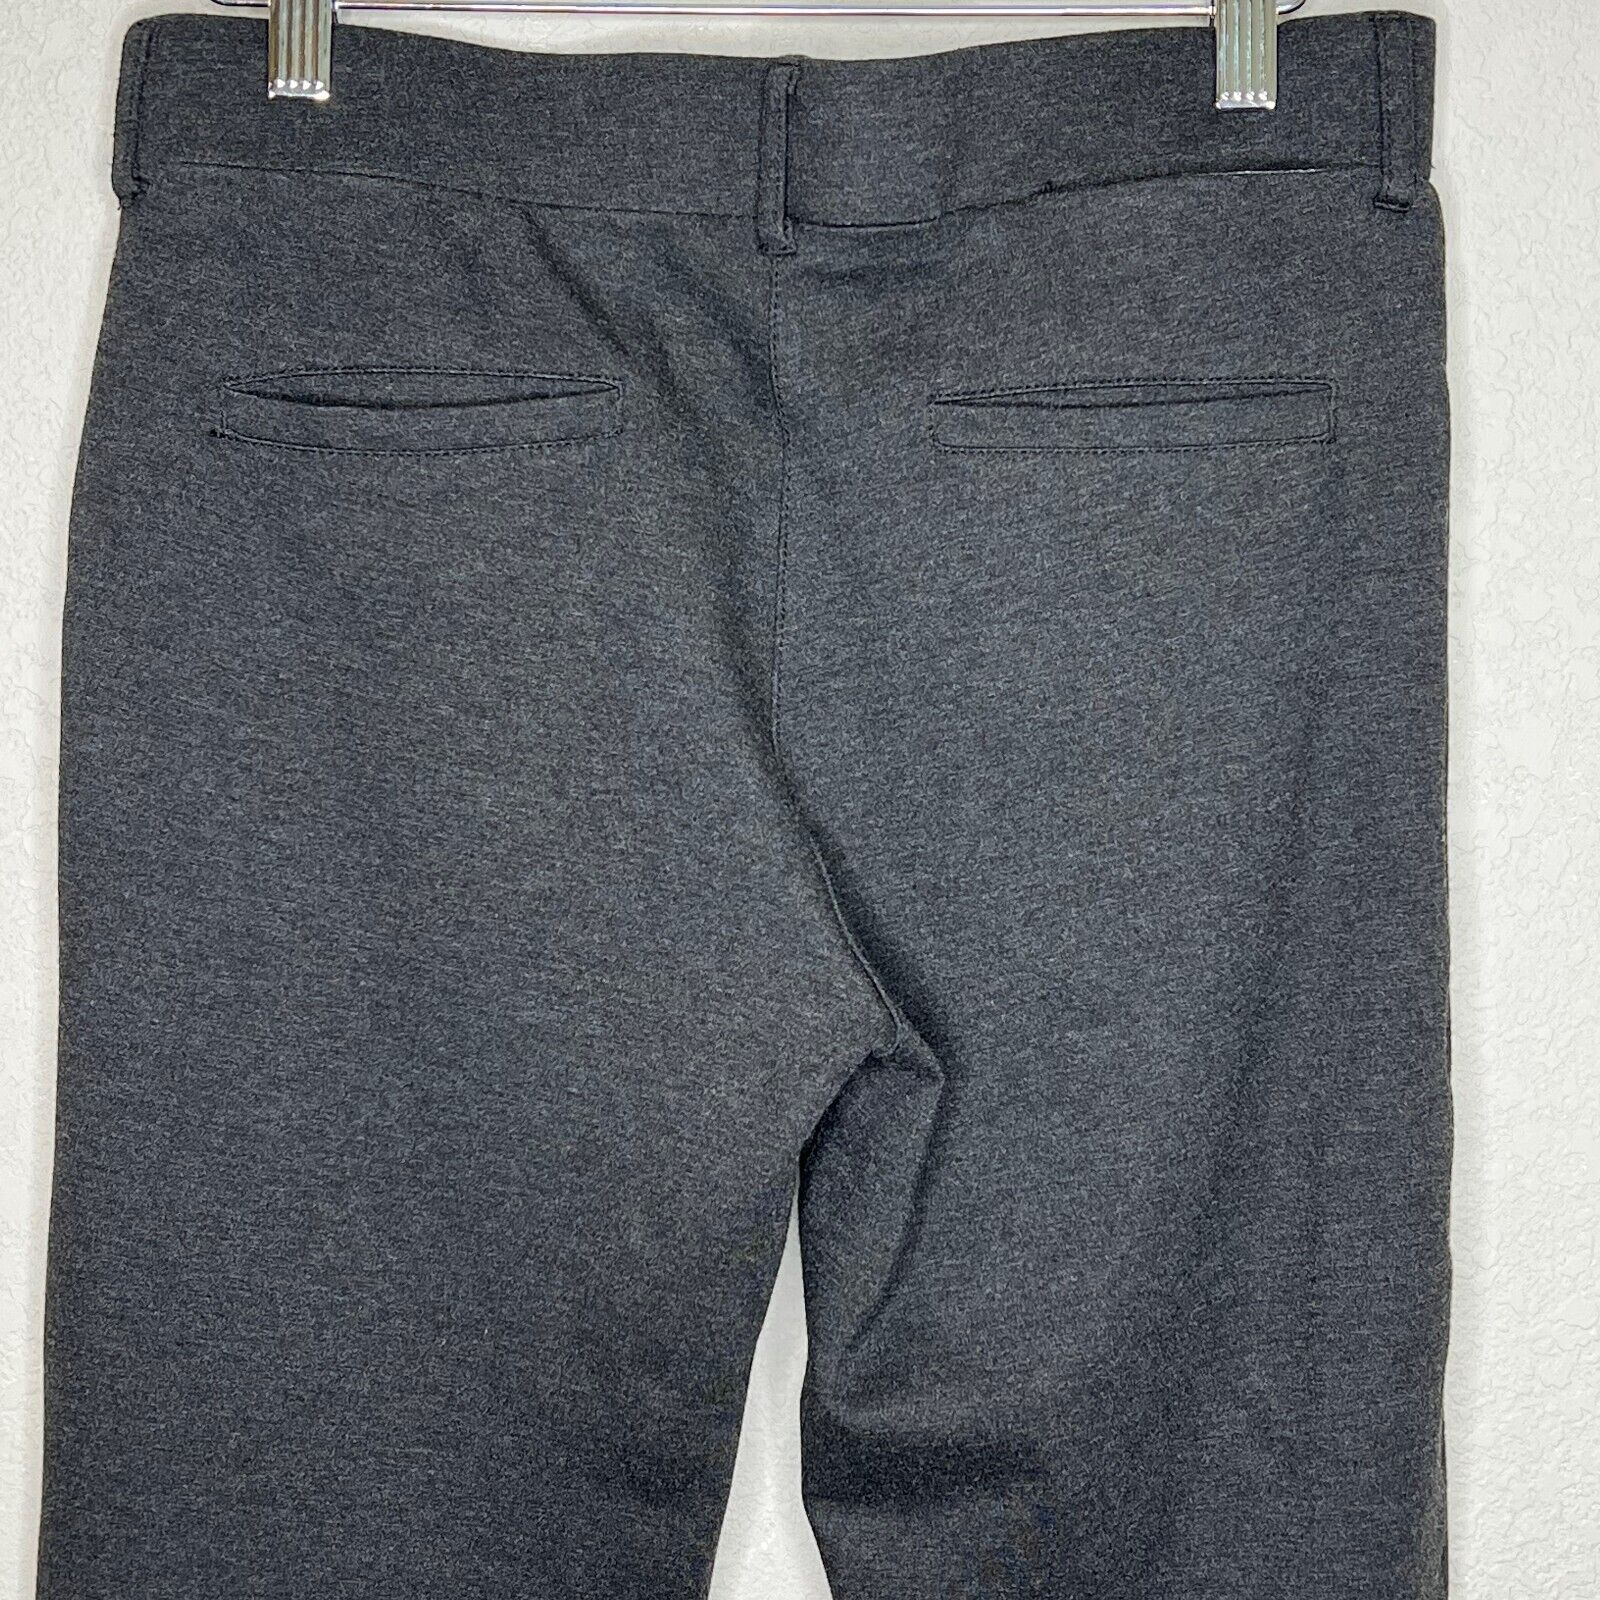 Betabrand Trousers Dress Pant Yoga Straight Leg Dark Charcoal Gray Medium Petite